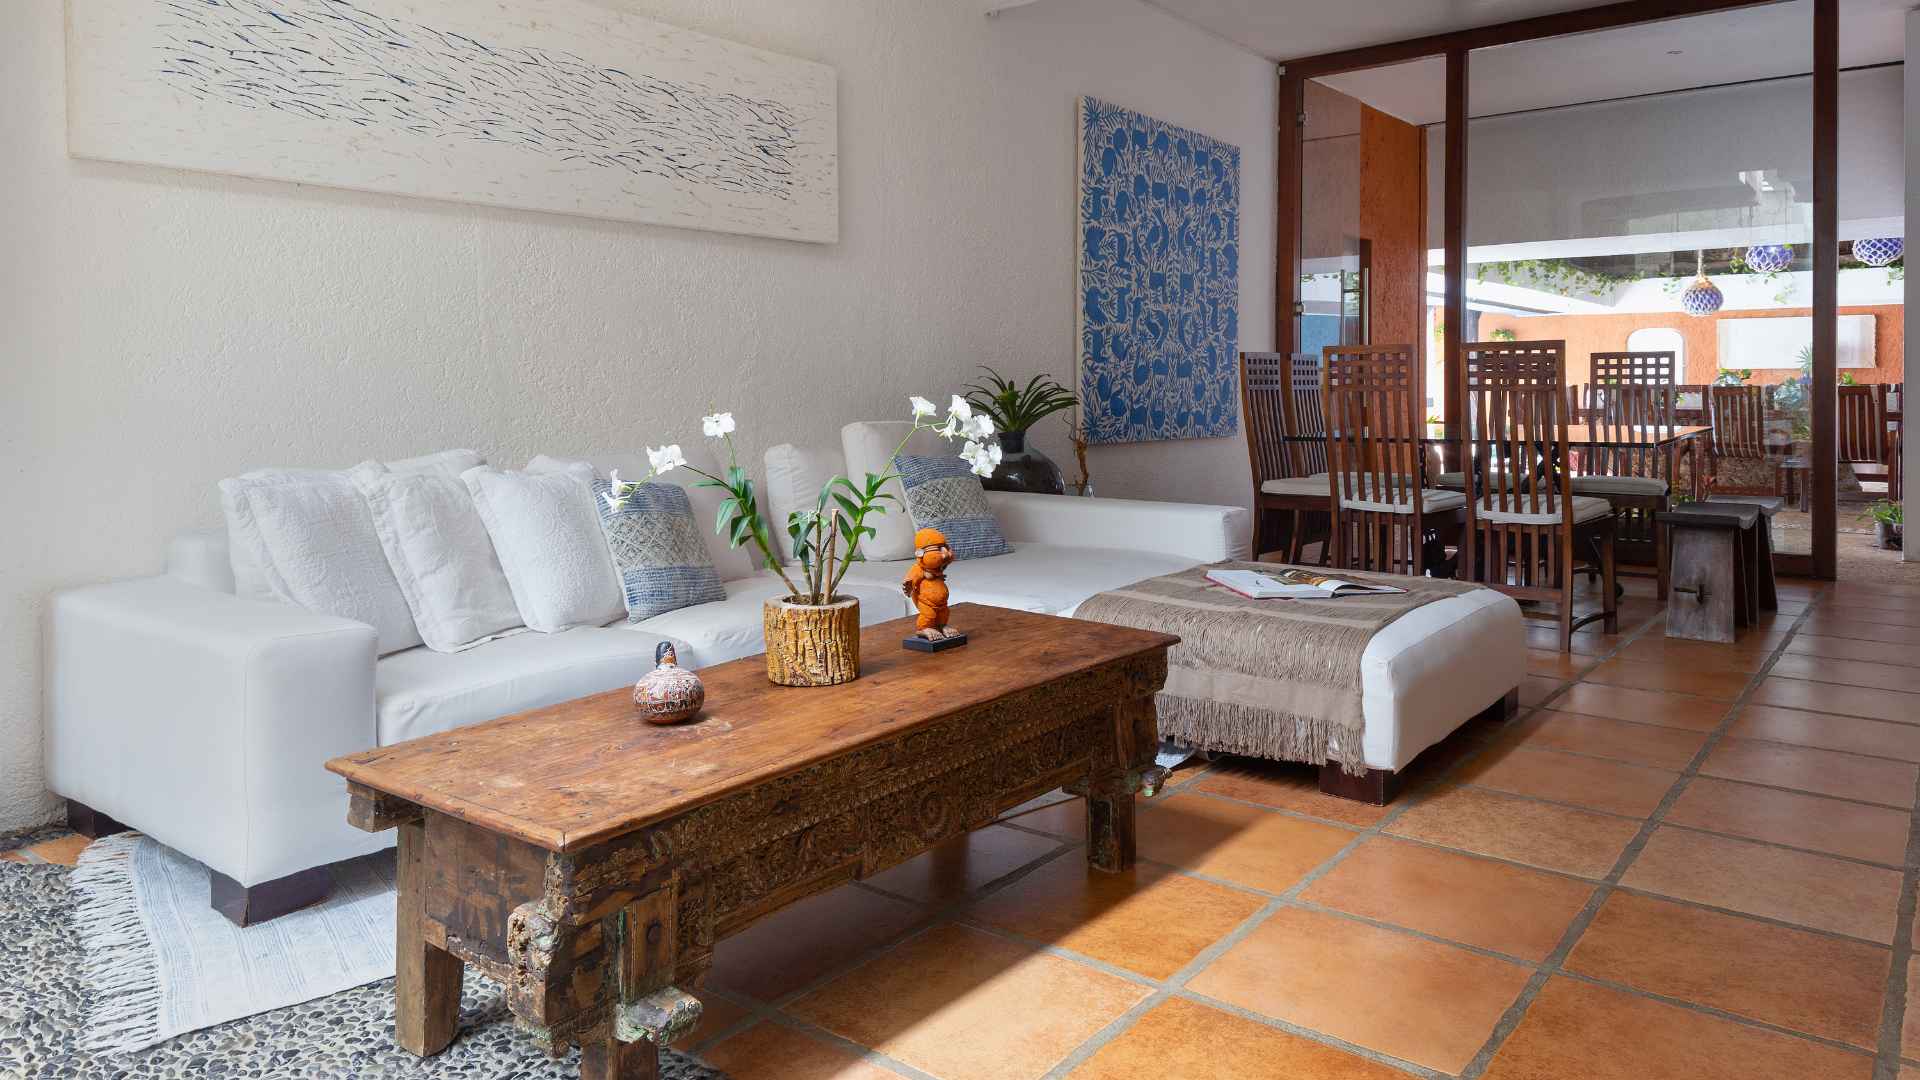 Casa Corazon - Riviera Maya